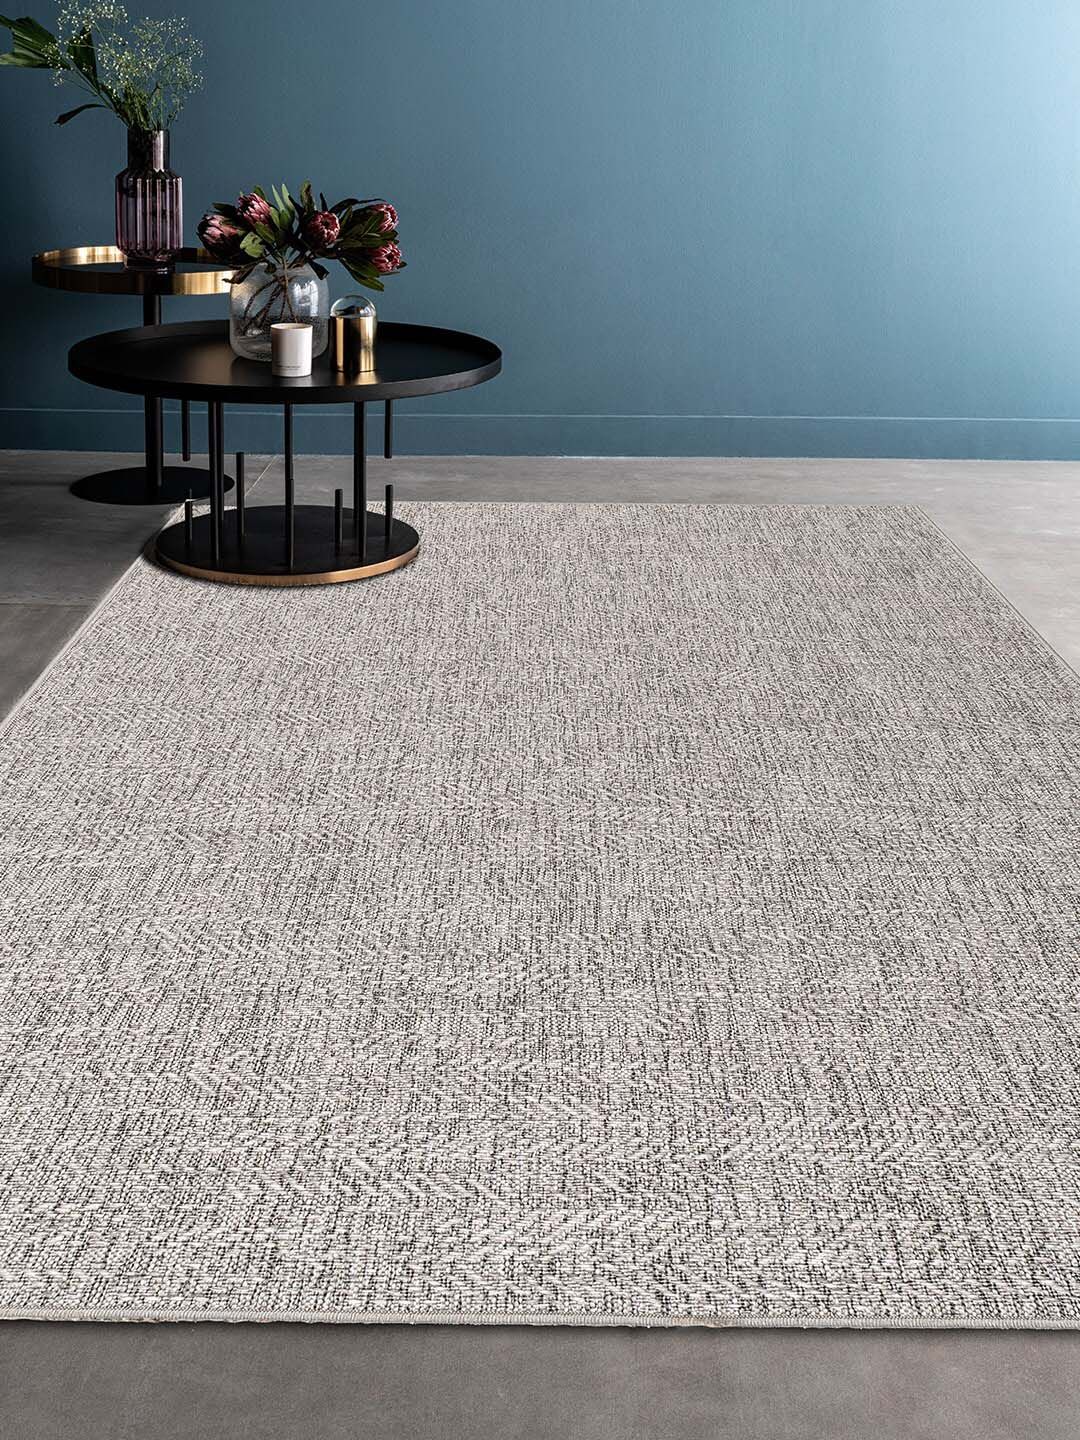 DDecor Grey Textured Carpet Price in India